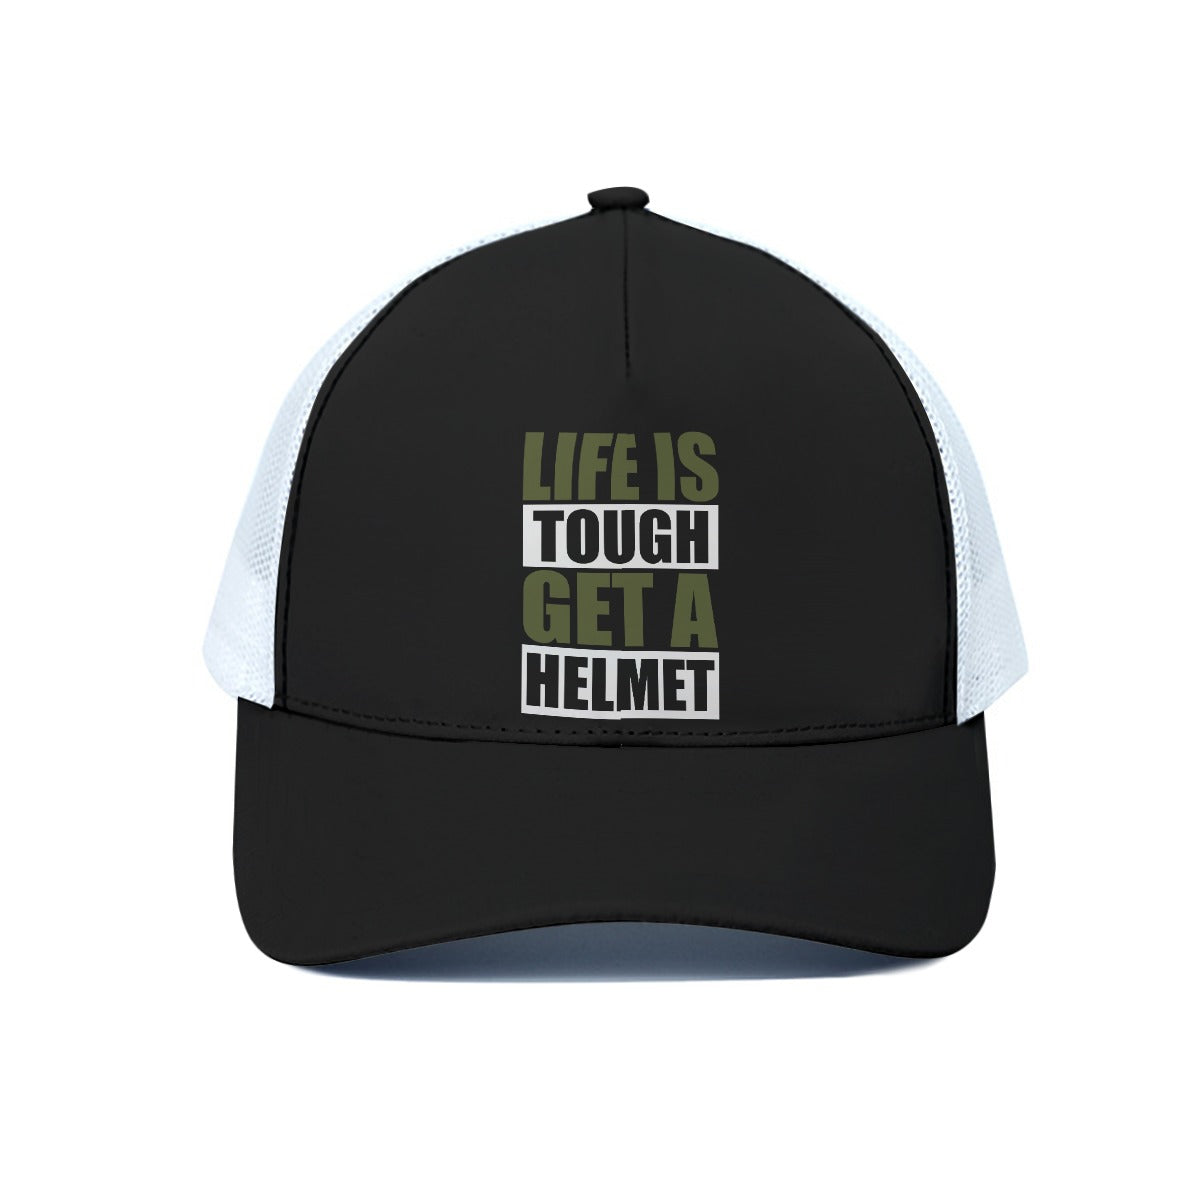 TRUCKER HAT - Life is tough get a helmet